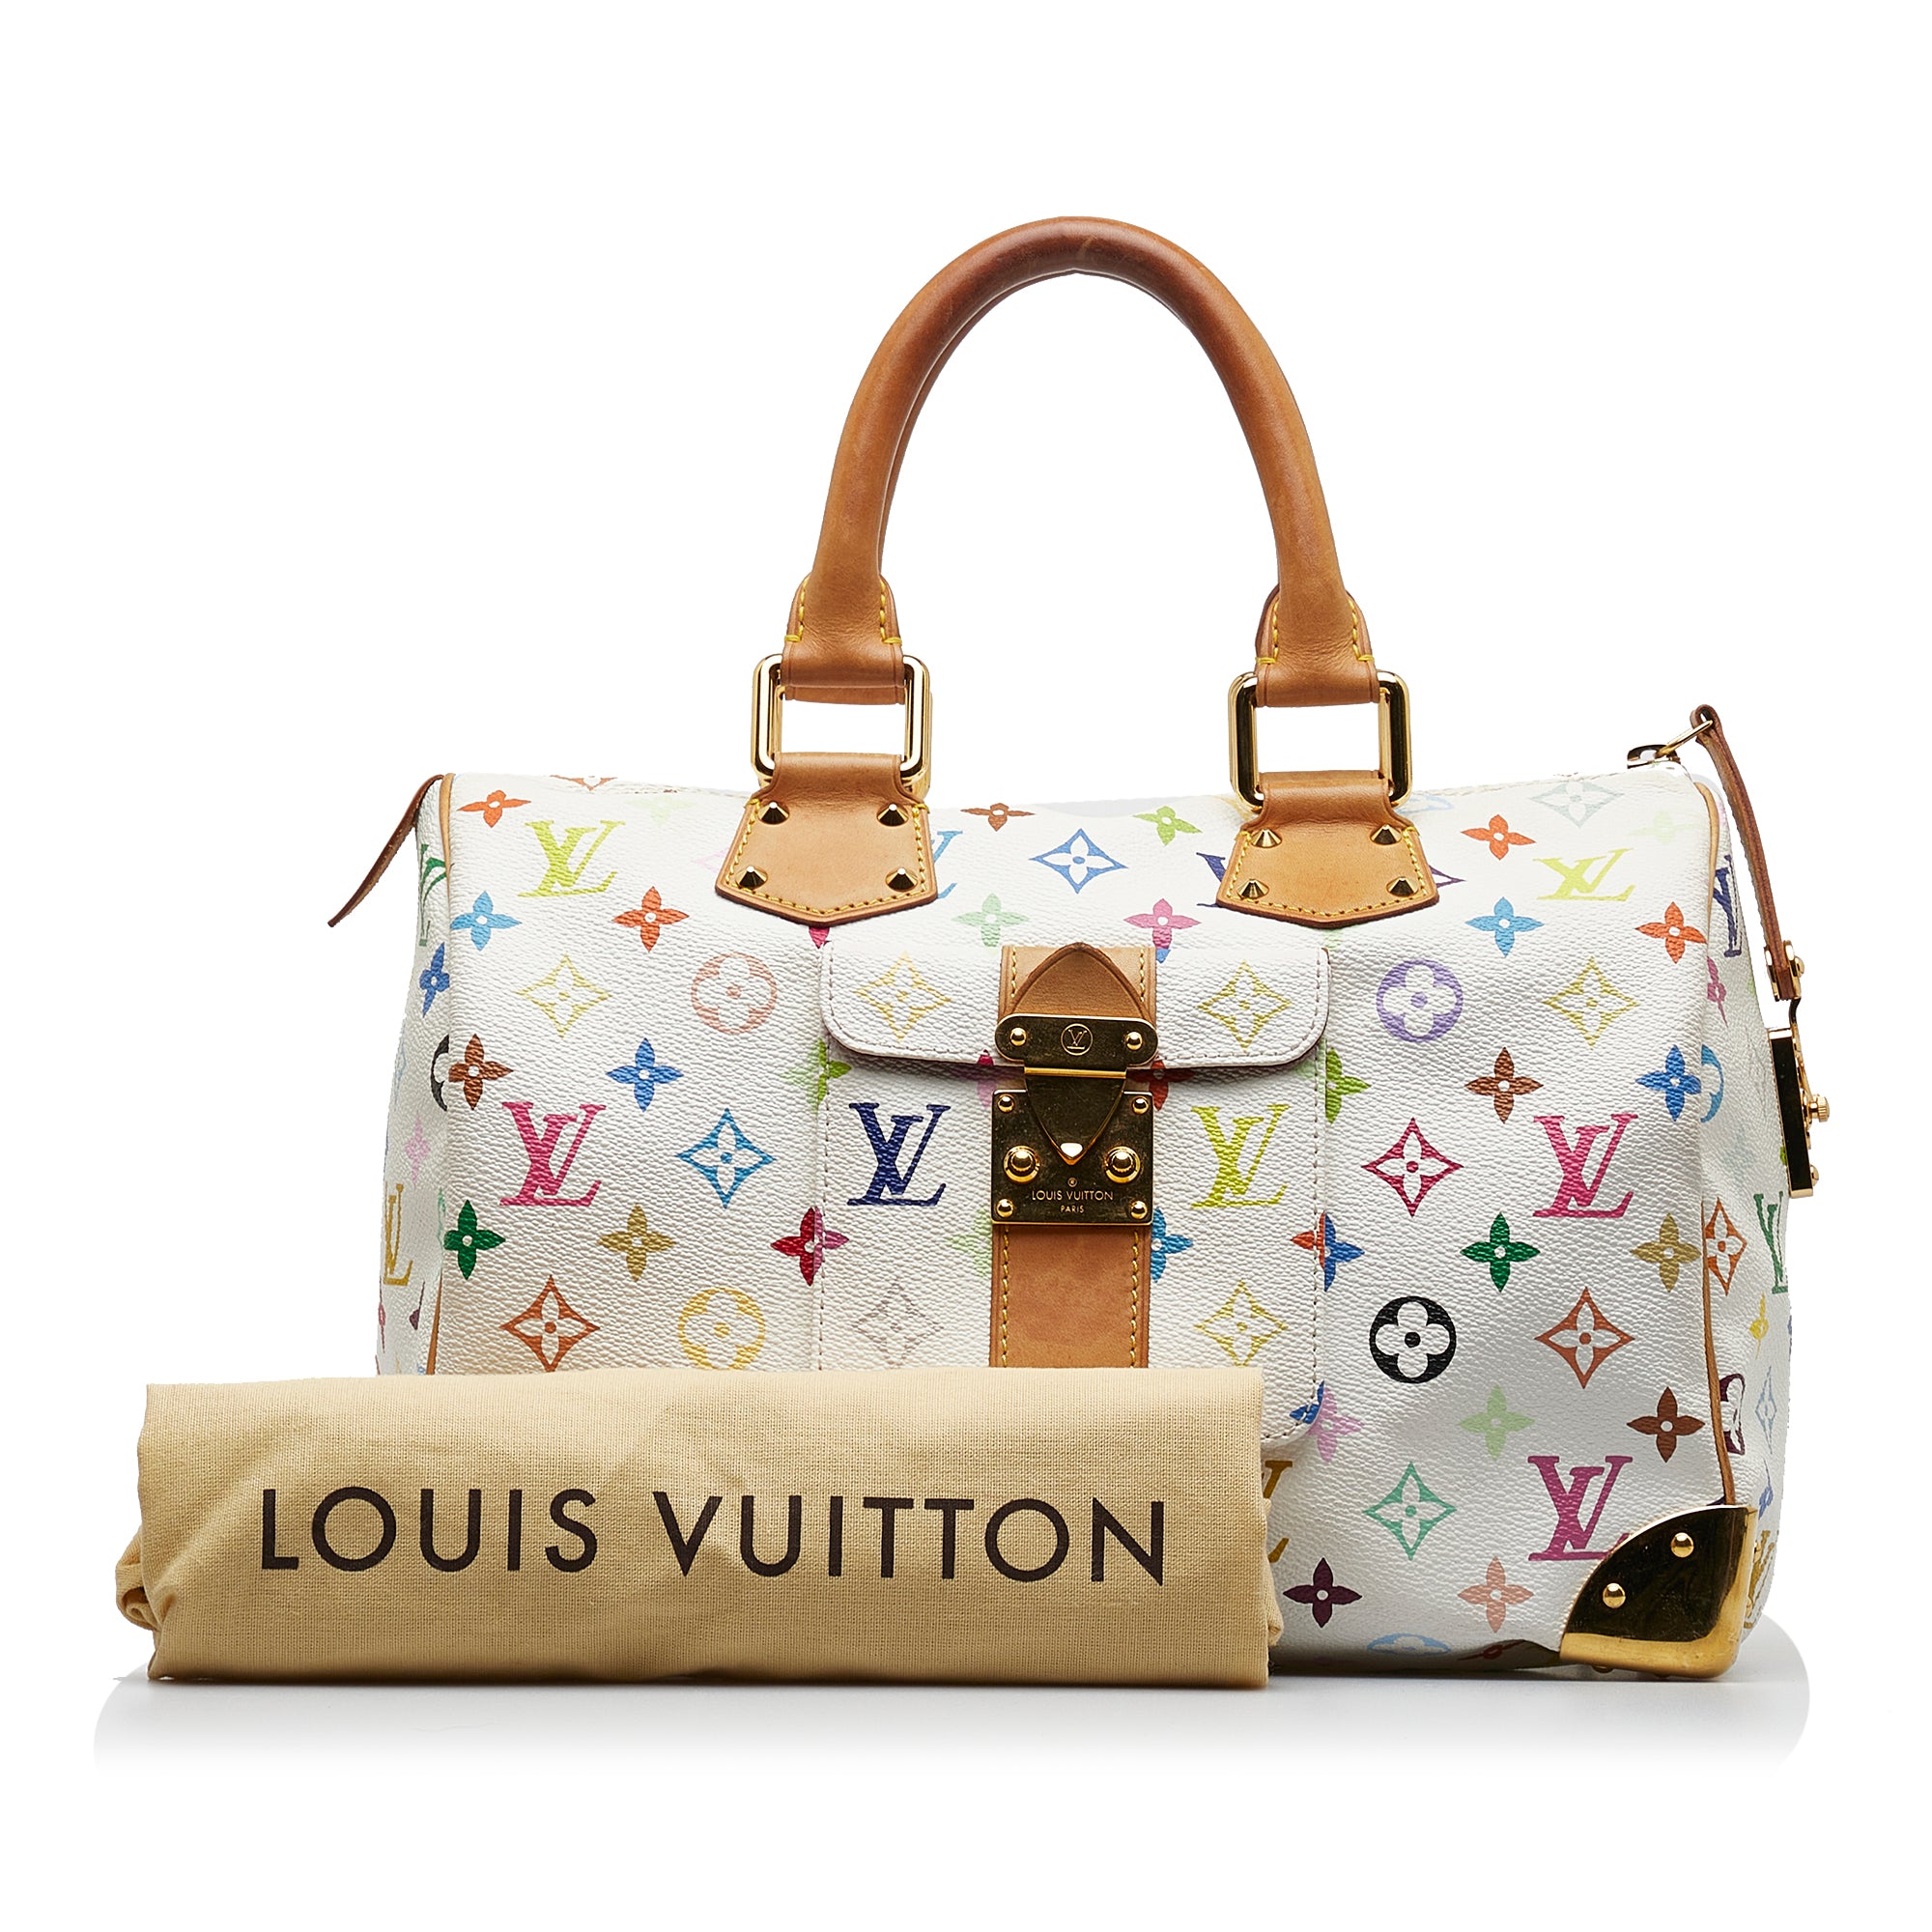 Louis Vuitton Speedy 30 in White Multicolore Monogram - SOLD